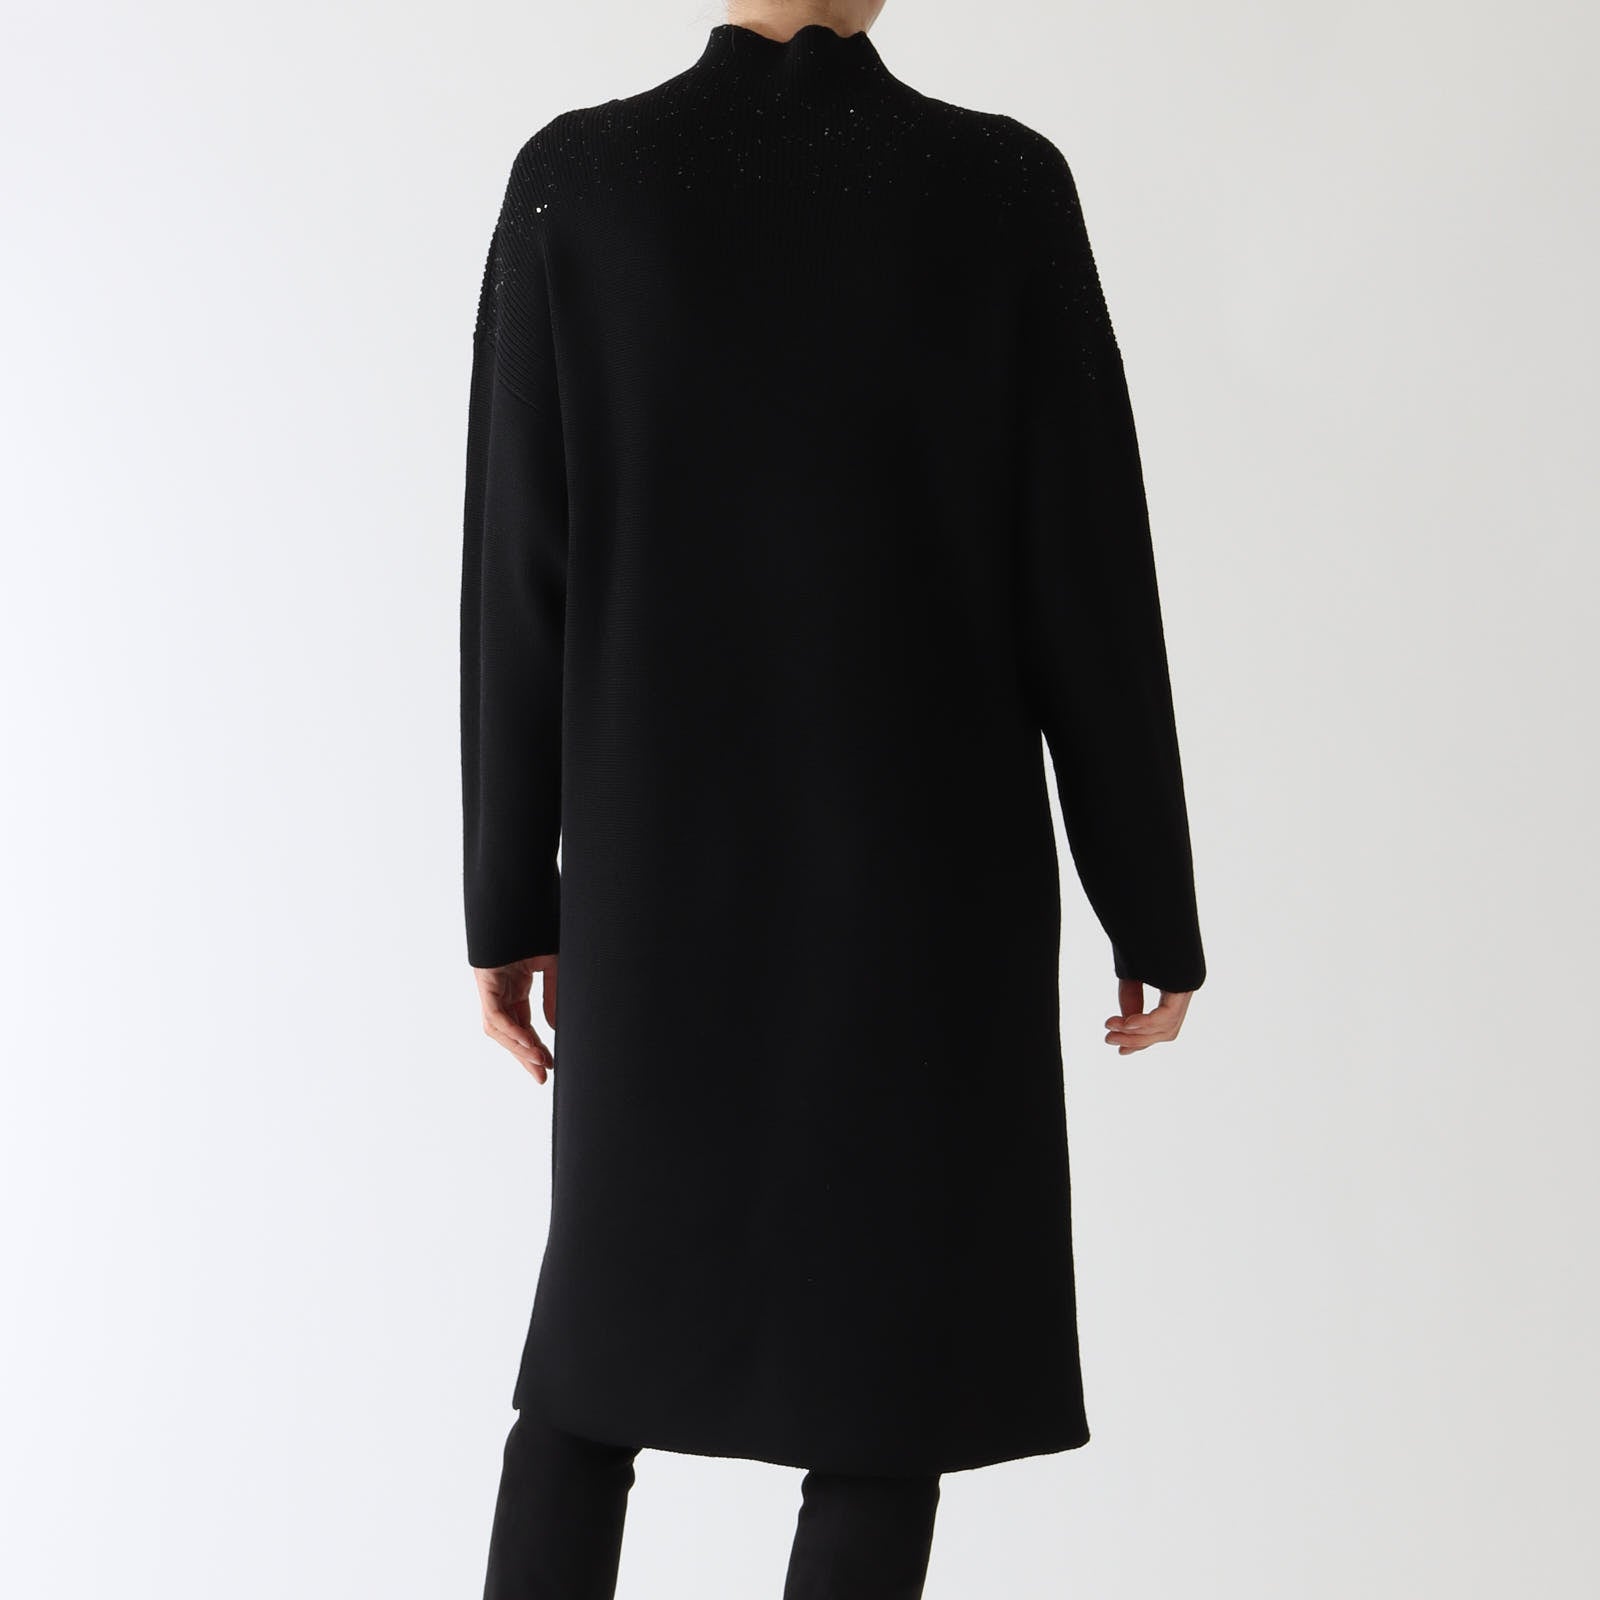 Black Sequin Knit Wool Dress